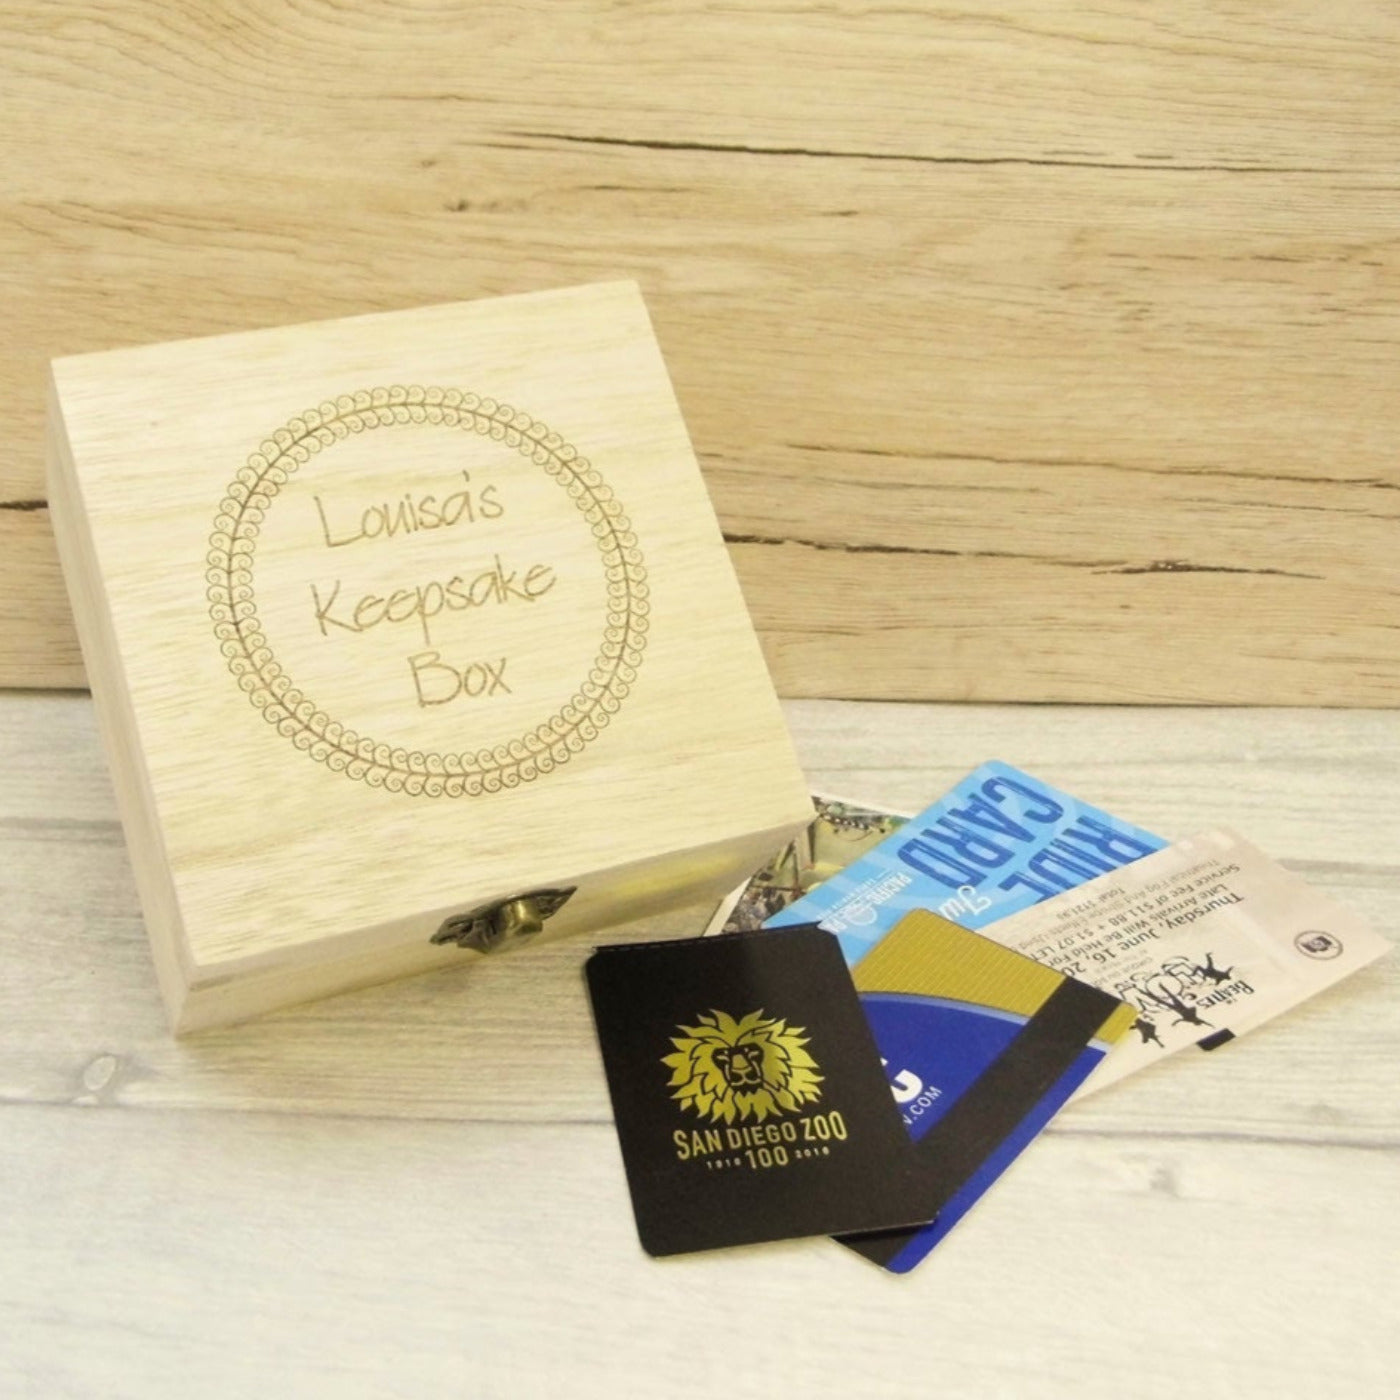 Personalised, Engraved Wooden Box - Keepsake Box